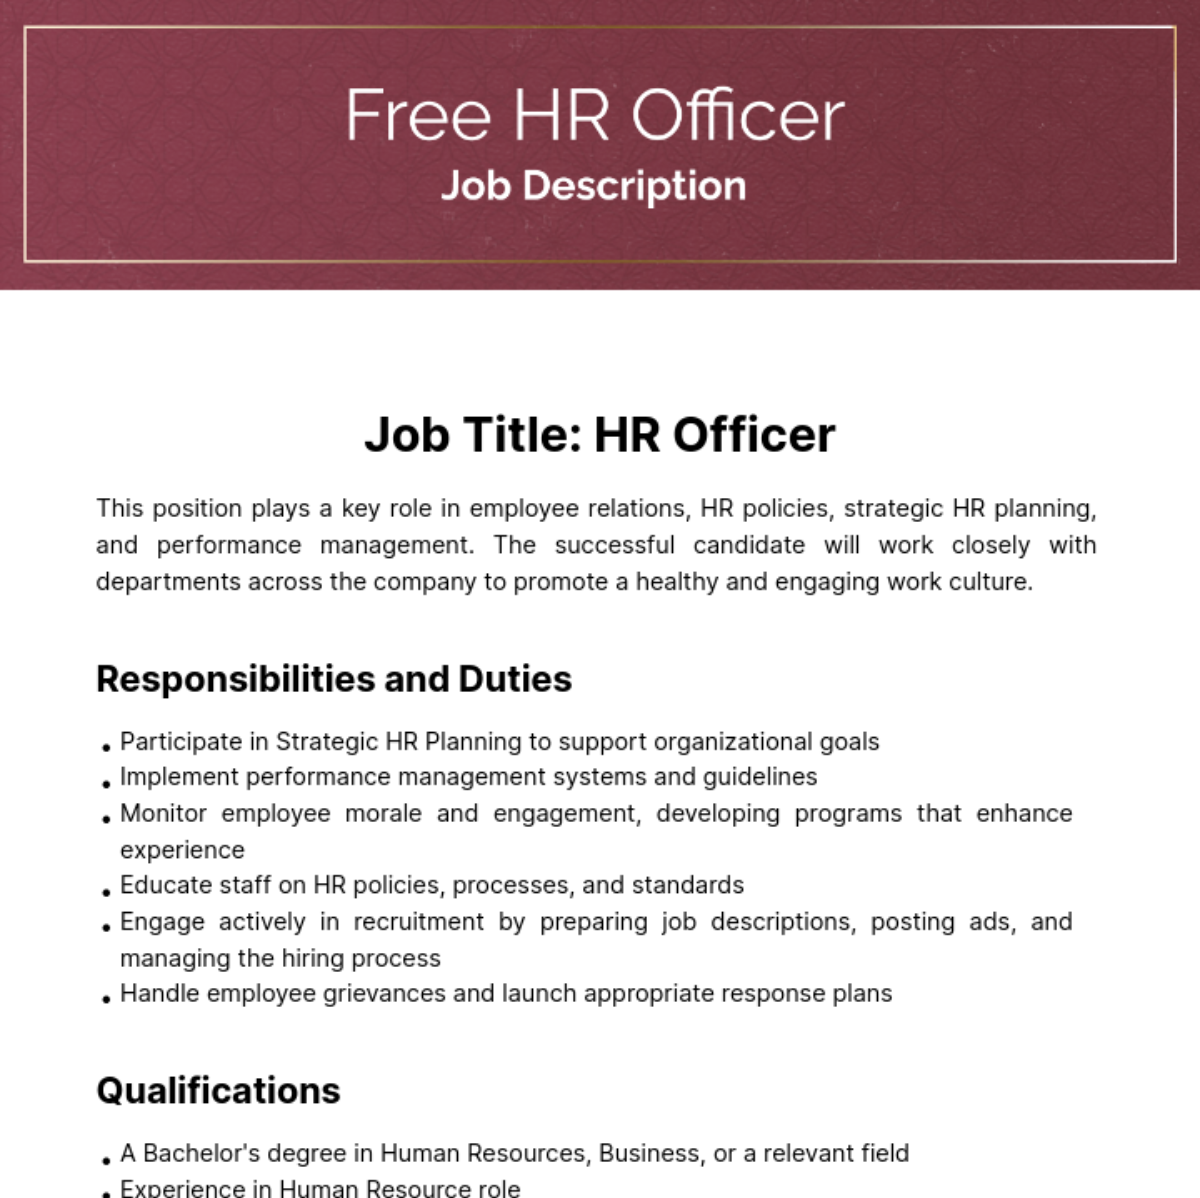 Human Resources (HR) Officer Job Description Template